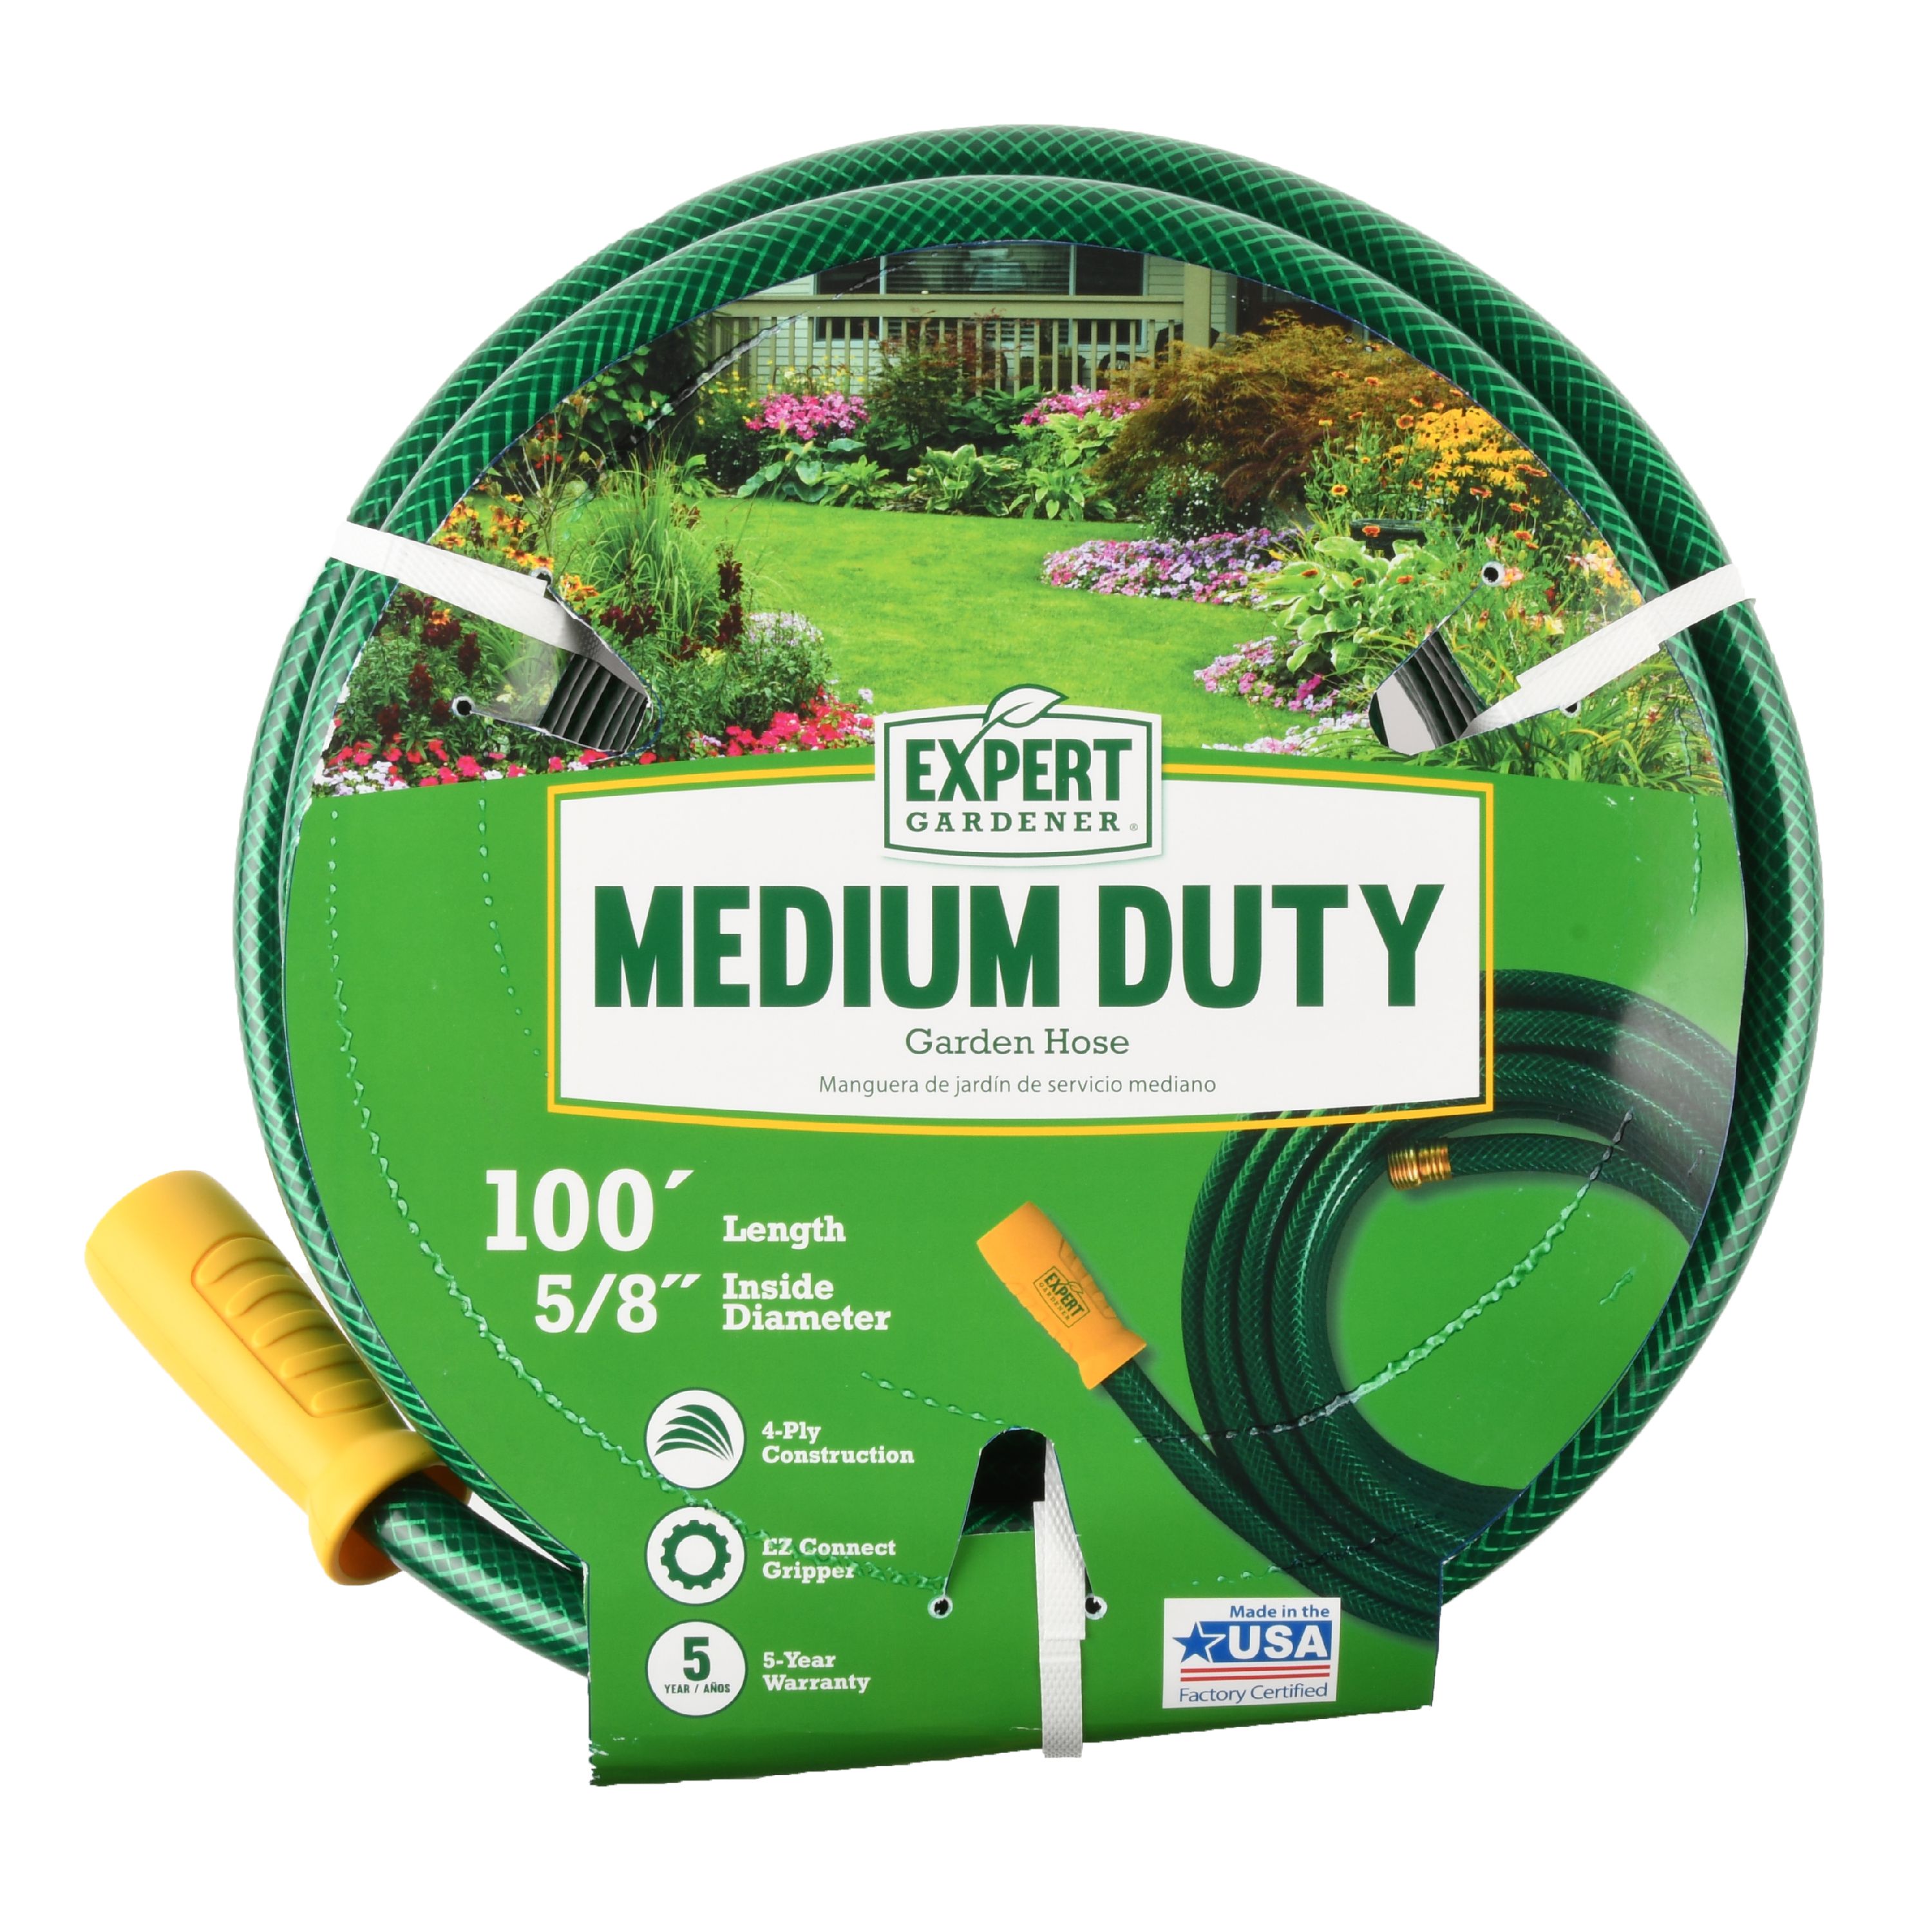 Expert Gardener Medium Duty 5/8" x 100' Garden Hose - image 1 of 13